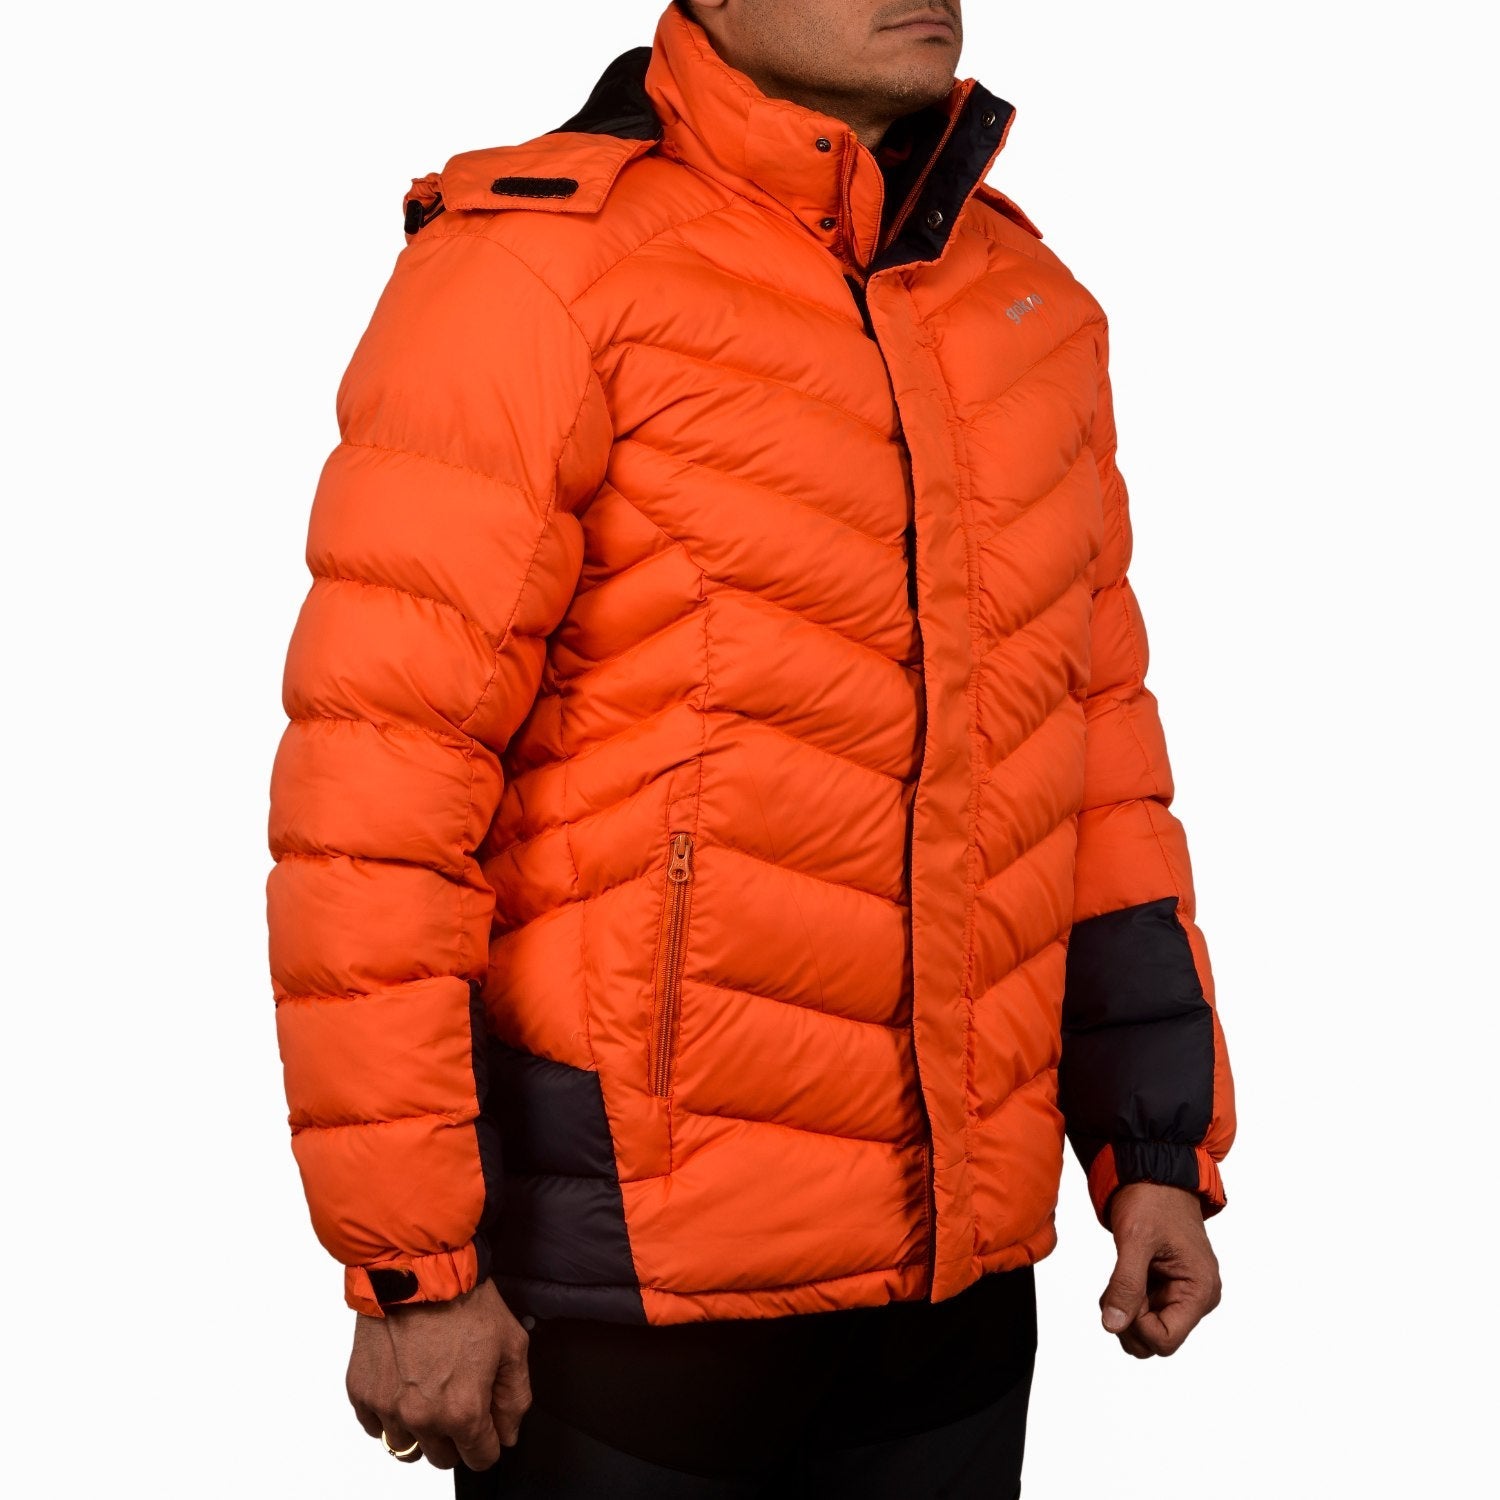 Buy Gokyo K2 Survivor Down Jacket | Jackets at Gokyo Outdoor Clothing & Gear